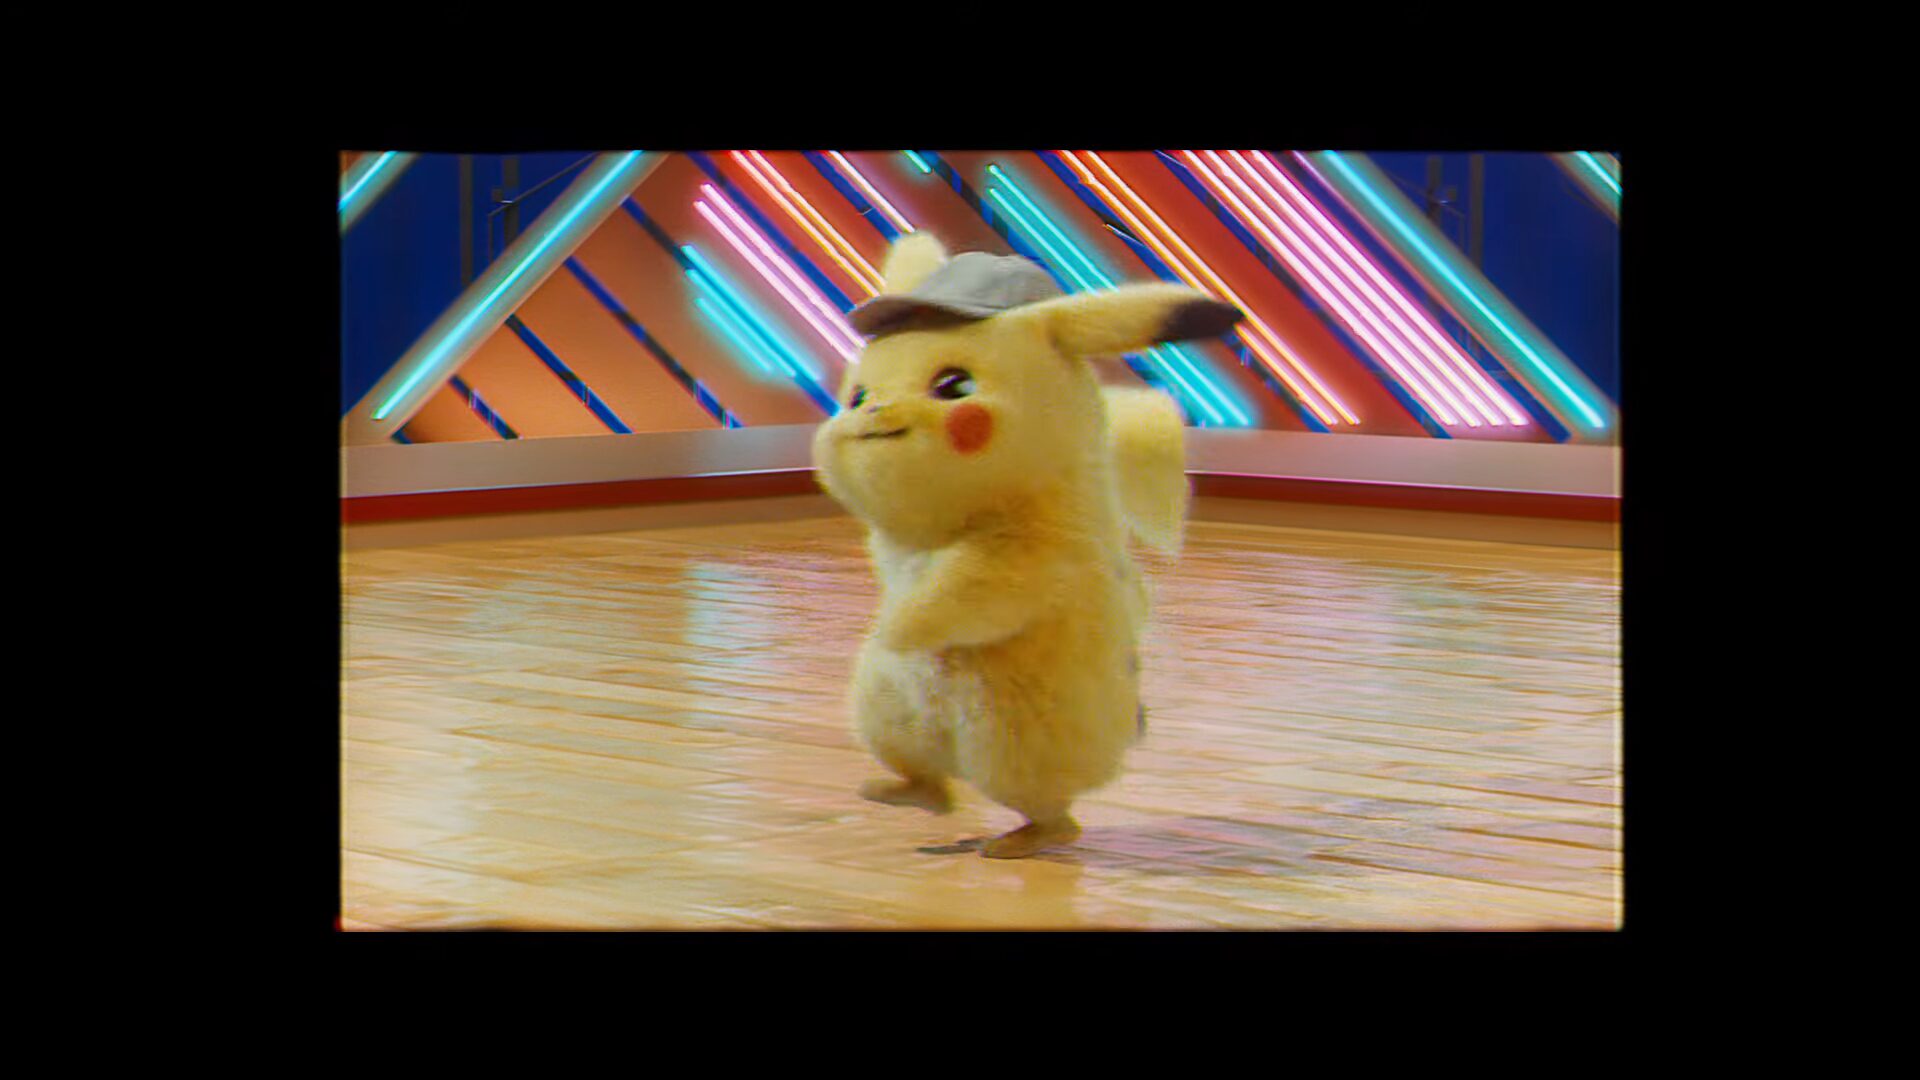 Full Detective Pikachu Movie Leaked On YouTube By Ryan Reynolds